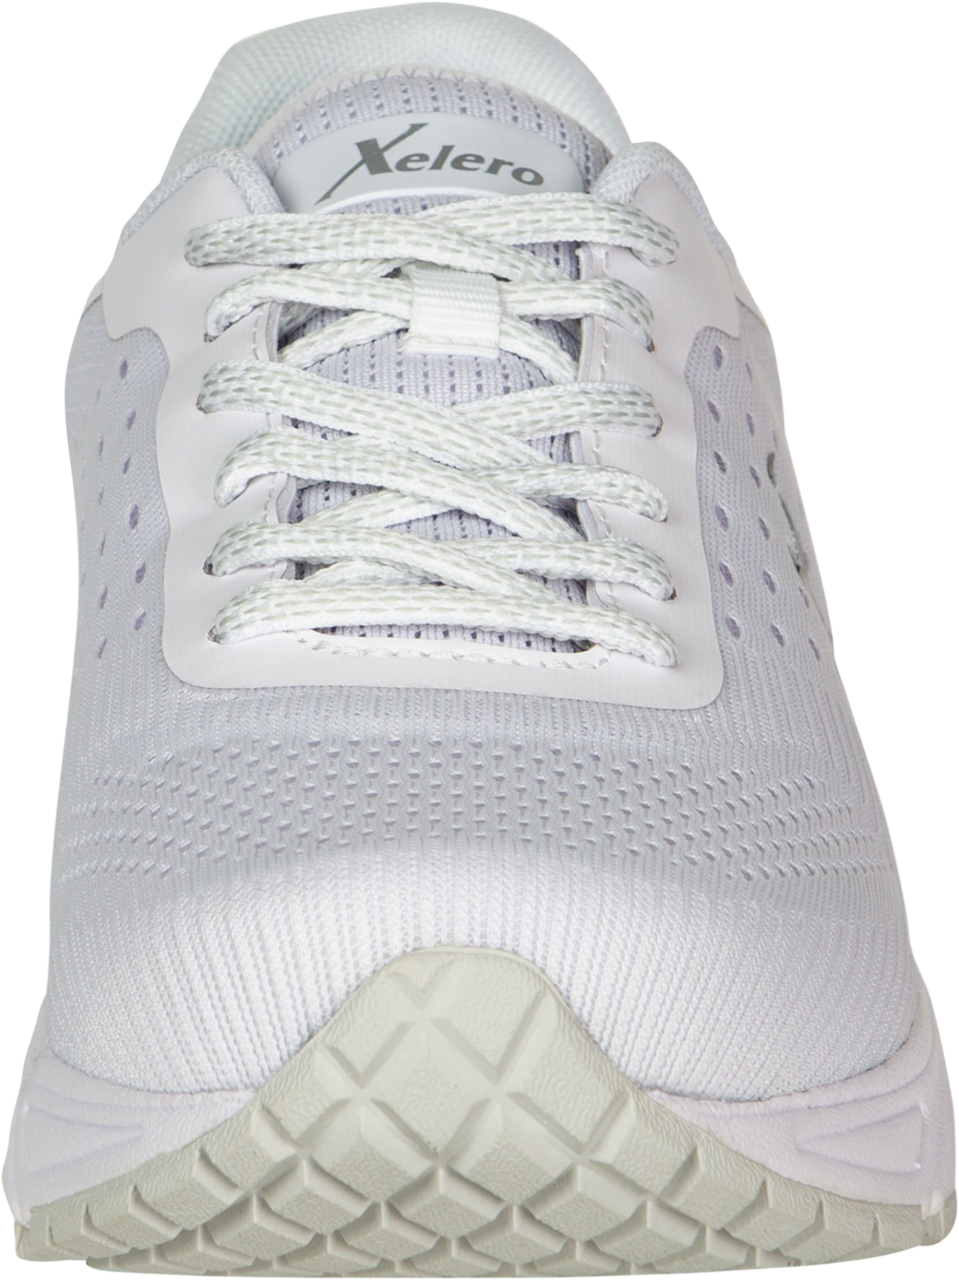 Genesis II Women's White X64221 | Xelero Shoes